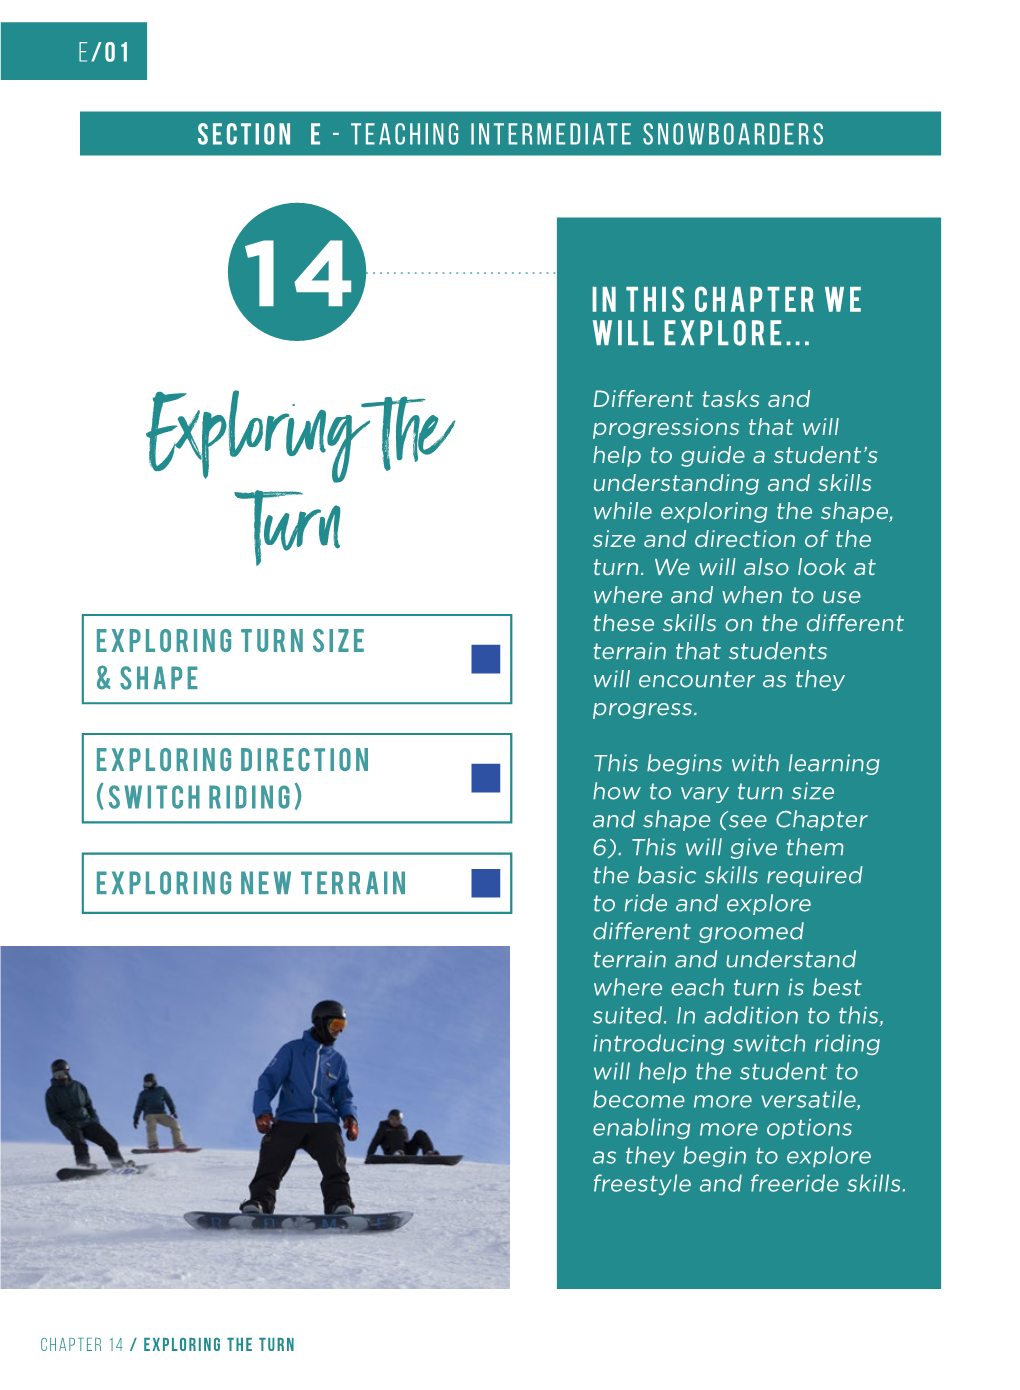 Section E (Teaching Intermediate Snowboarders)